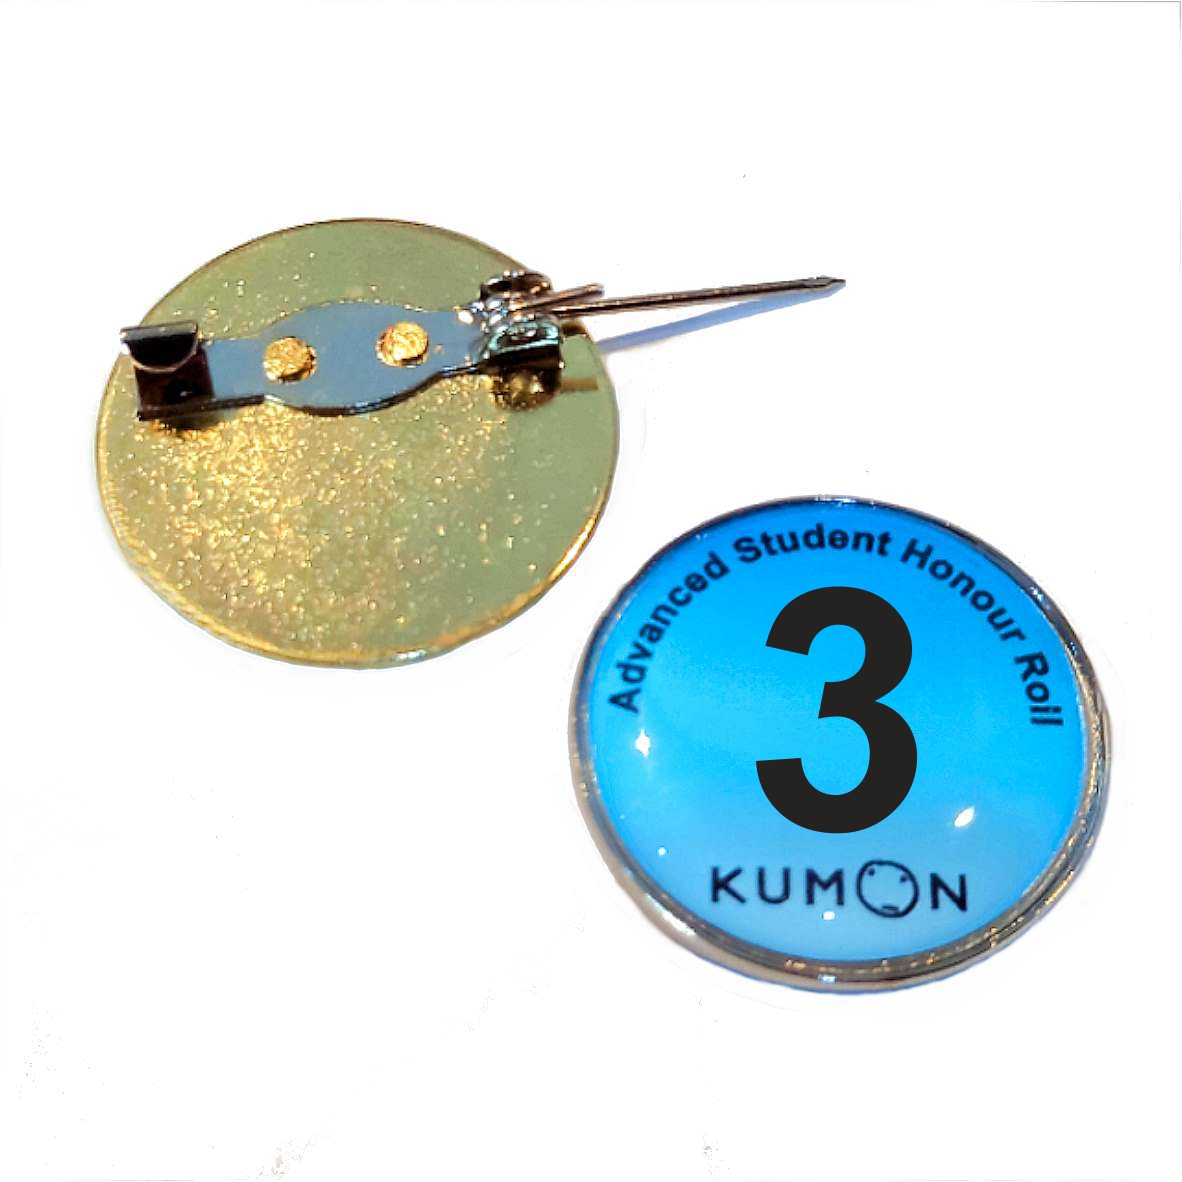 KUMON Advanced Student 3 blue 27mm Round